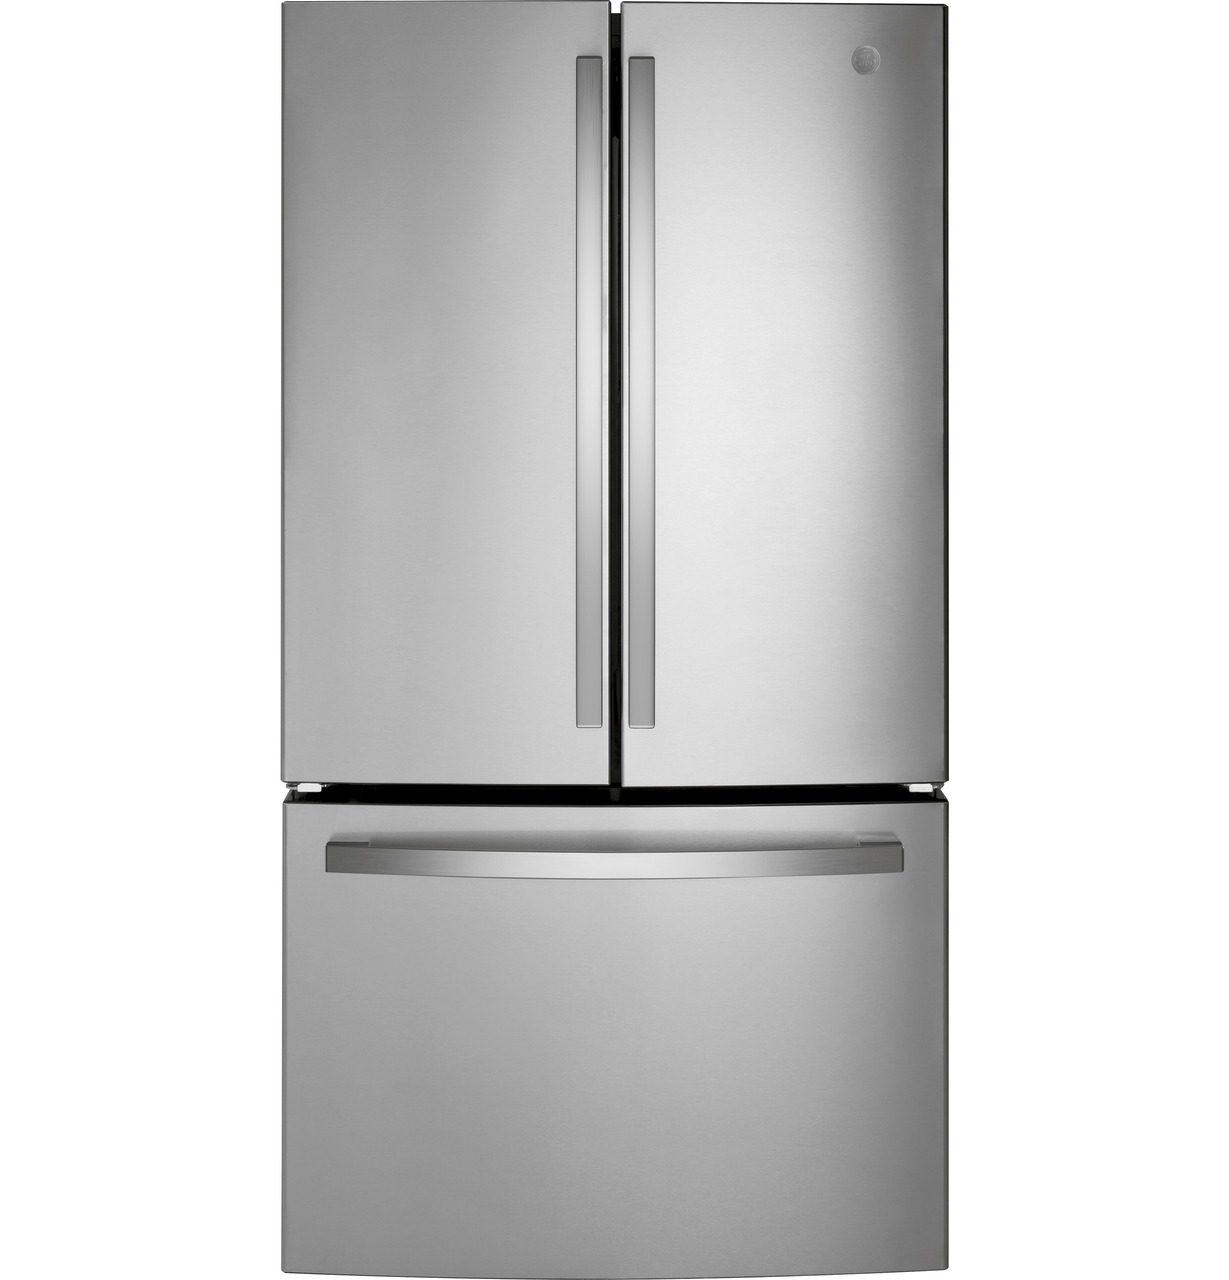 GE Energy Star fingerprint resistant french door refrigerator